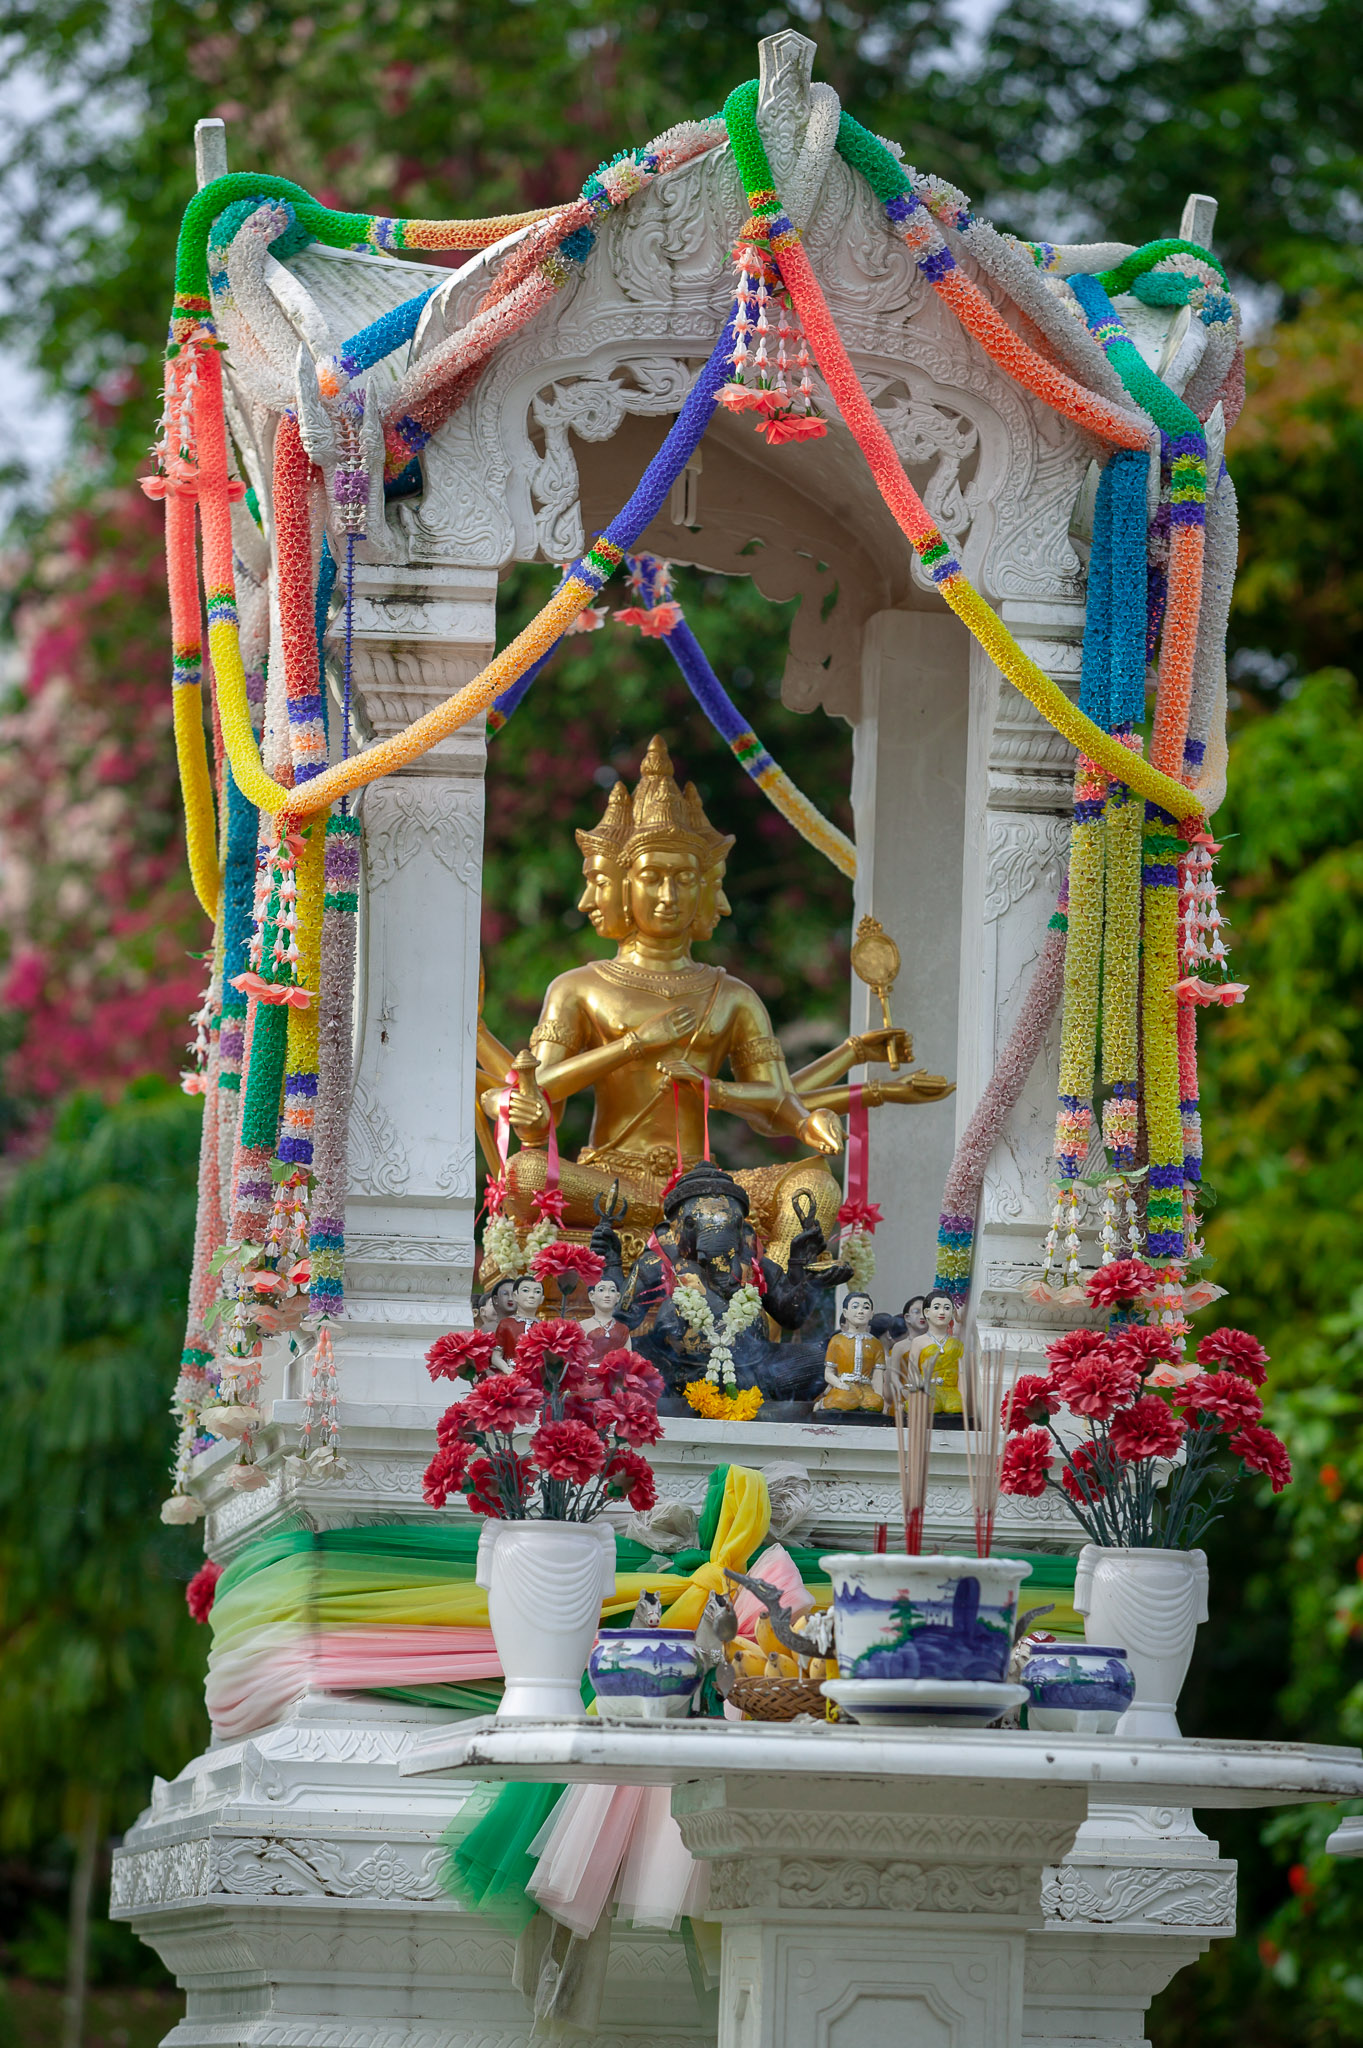 Spirit house, found at many Thai houses